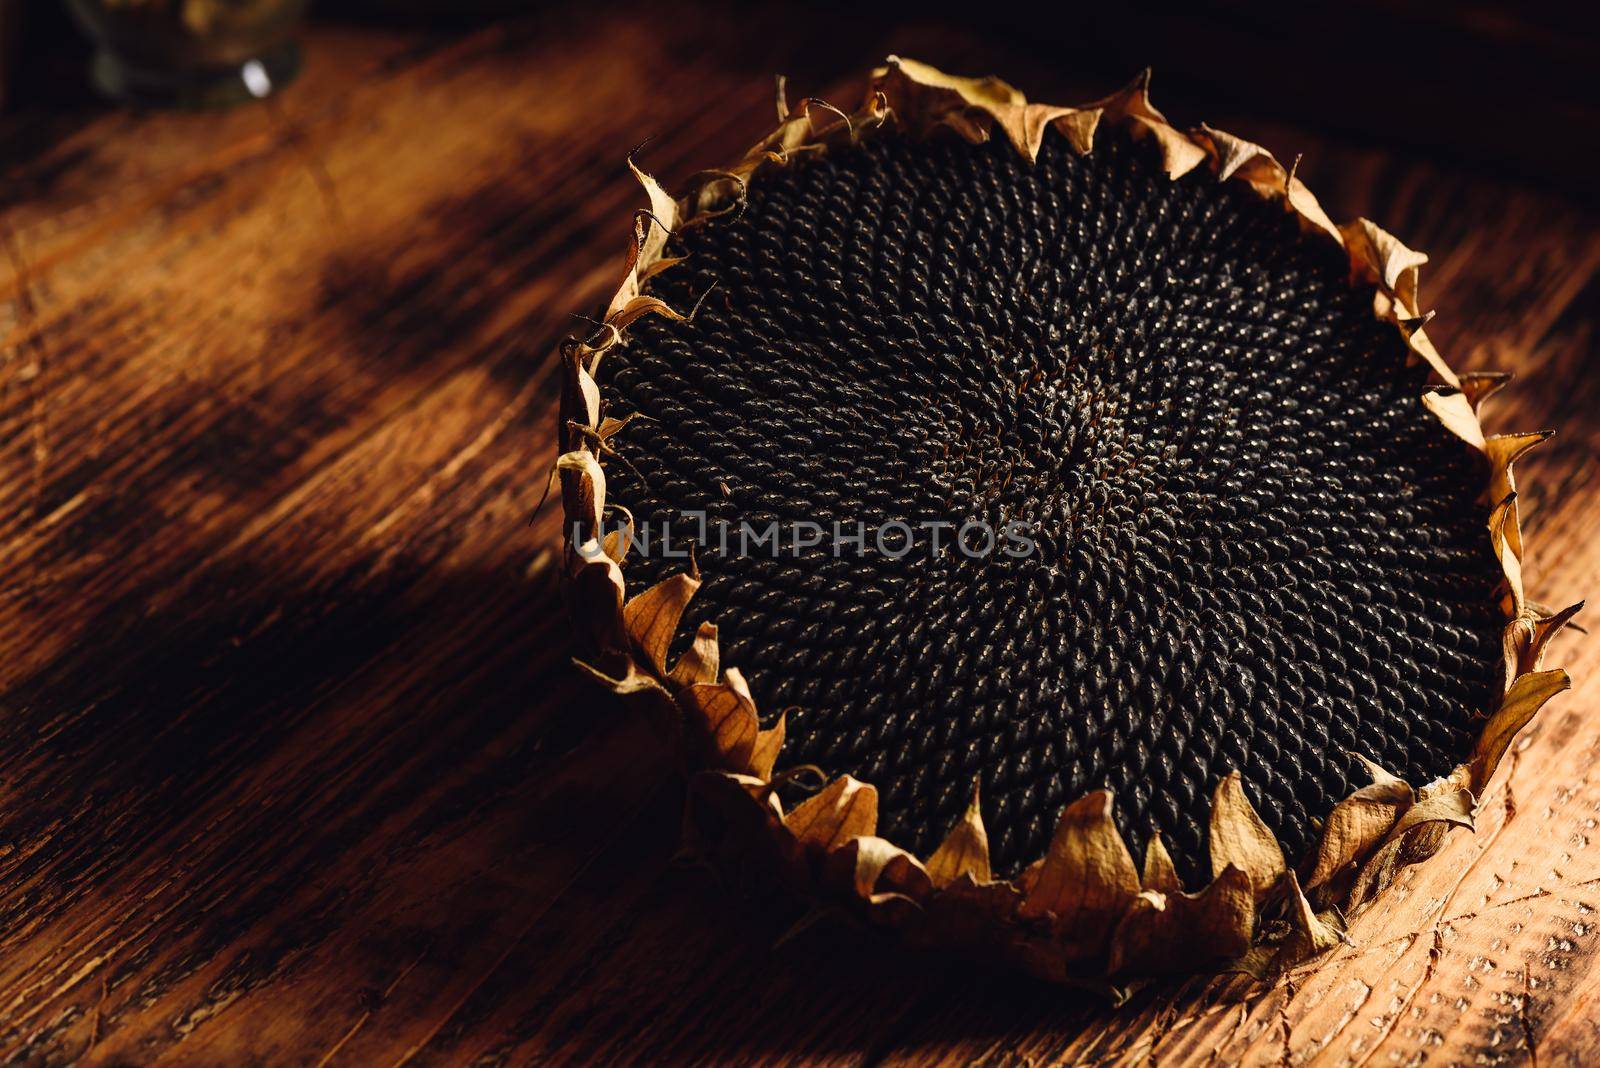 Dried sunflower head by Seva_blsv